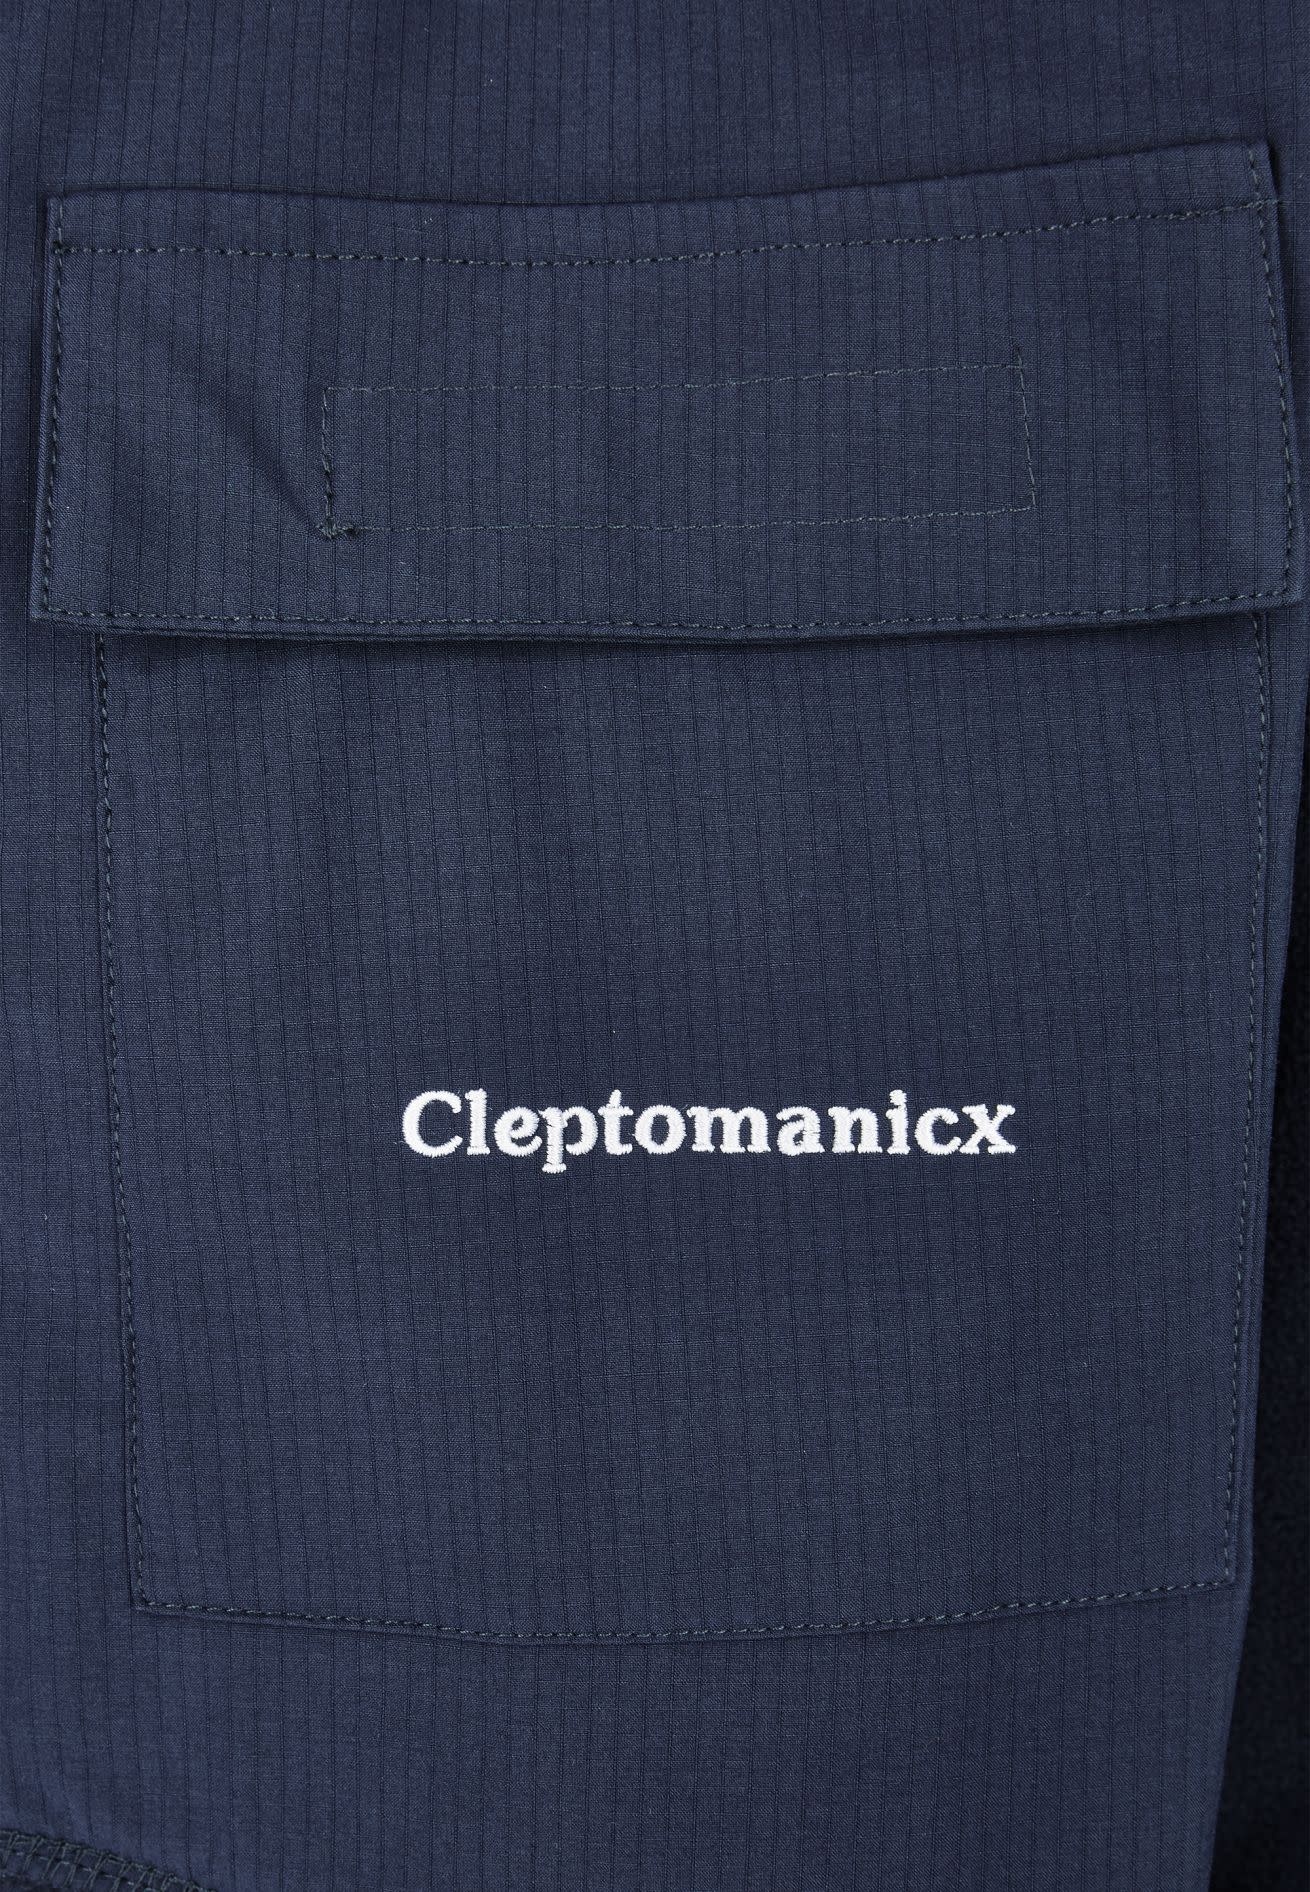 Cleptomanicx Cleptomanicx, Fisher Fleece Jacket, dark navy, M